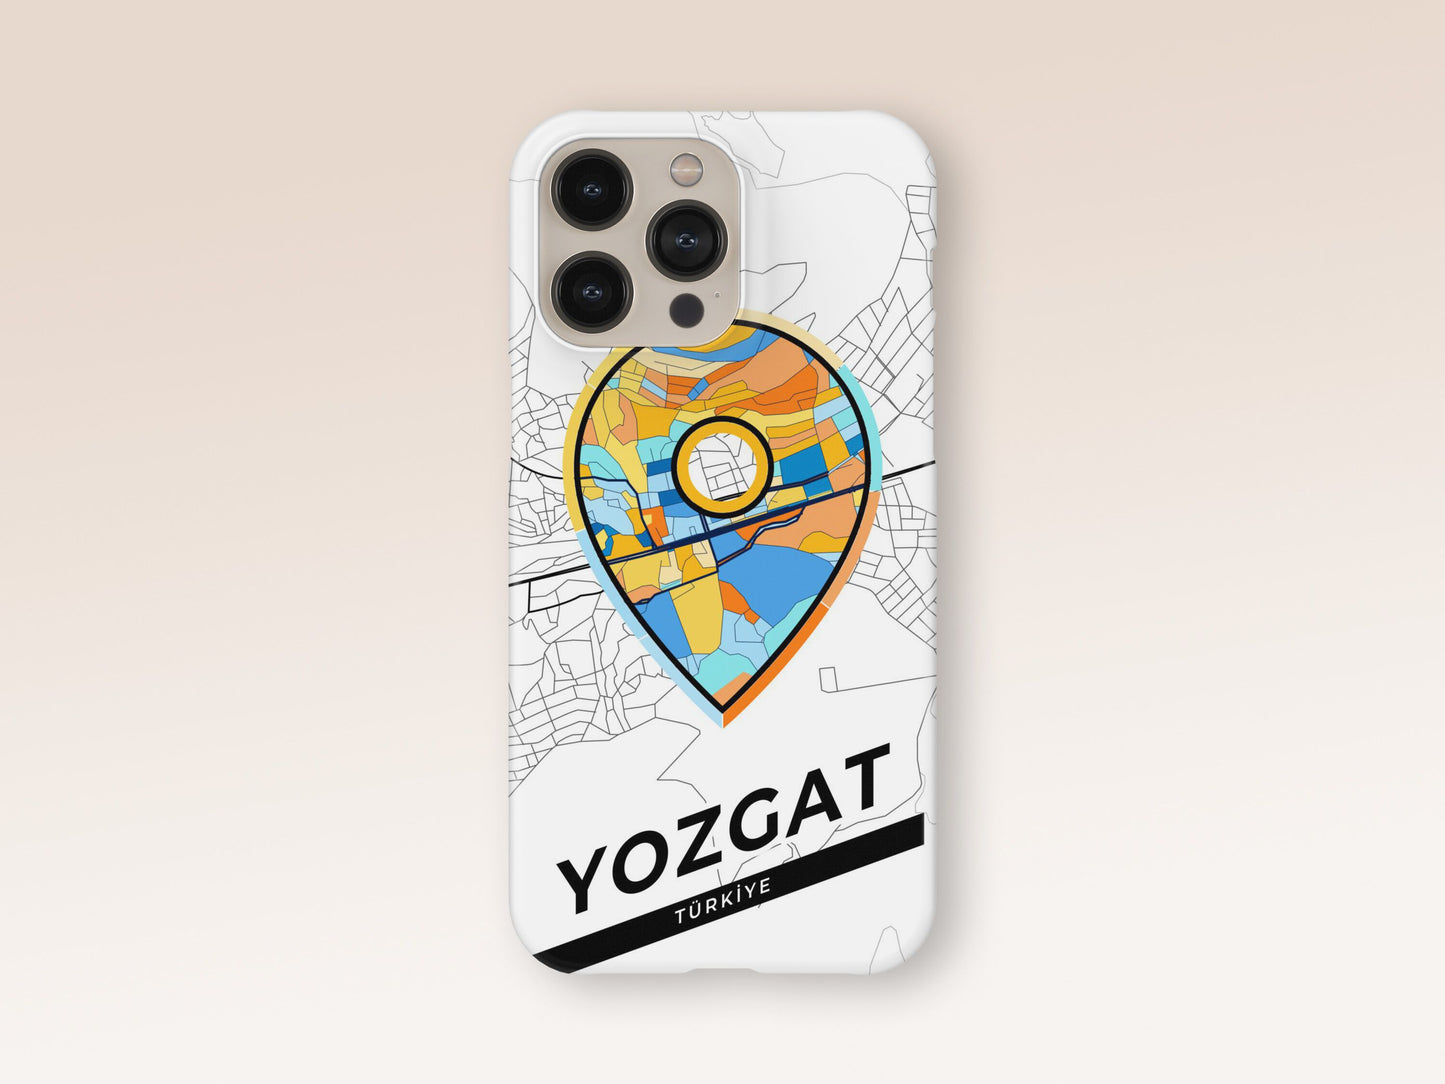 Yozgat Turkey slim phone case with colorful icon 1